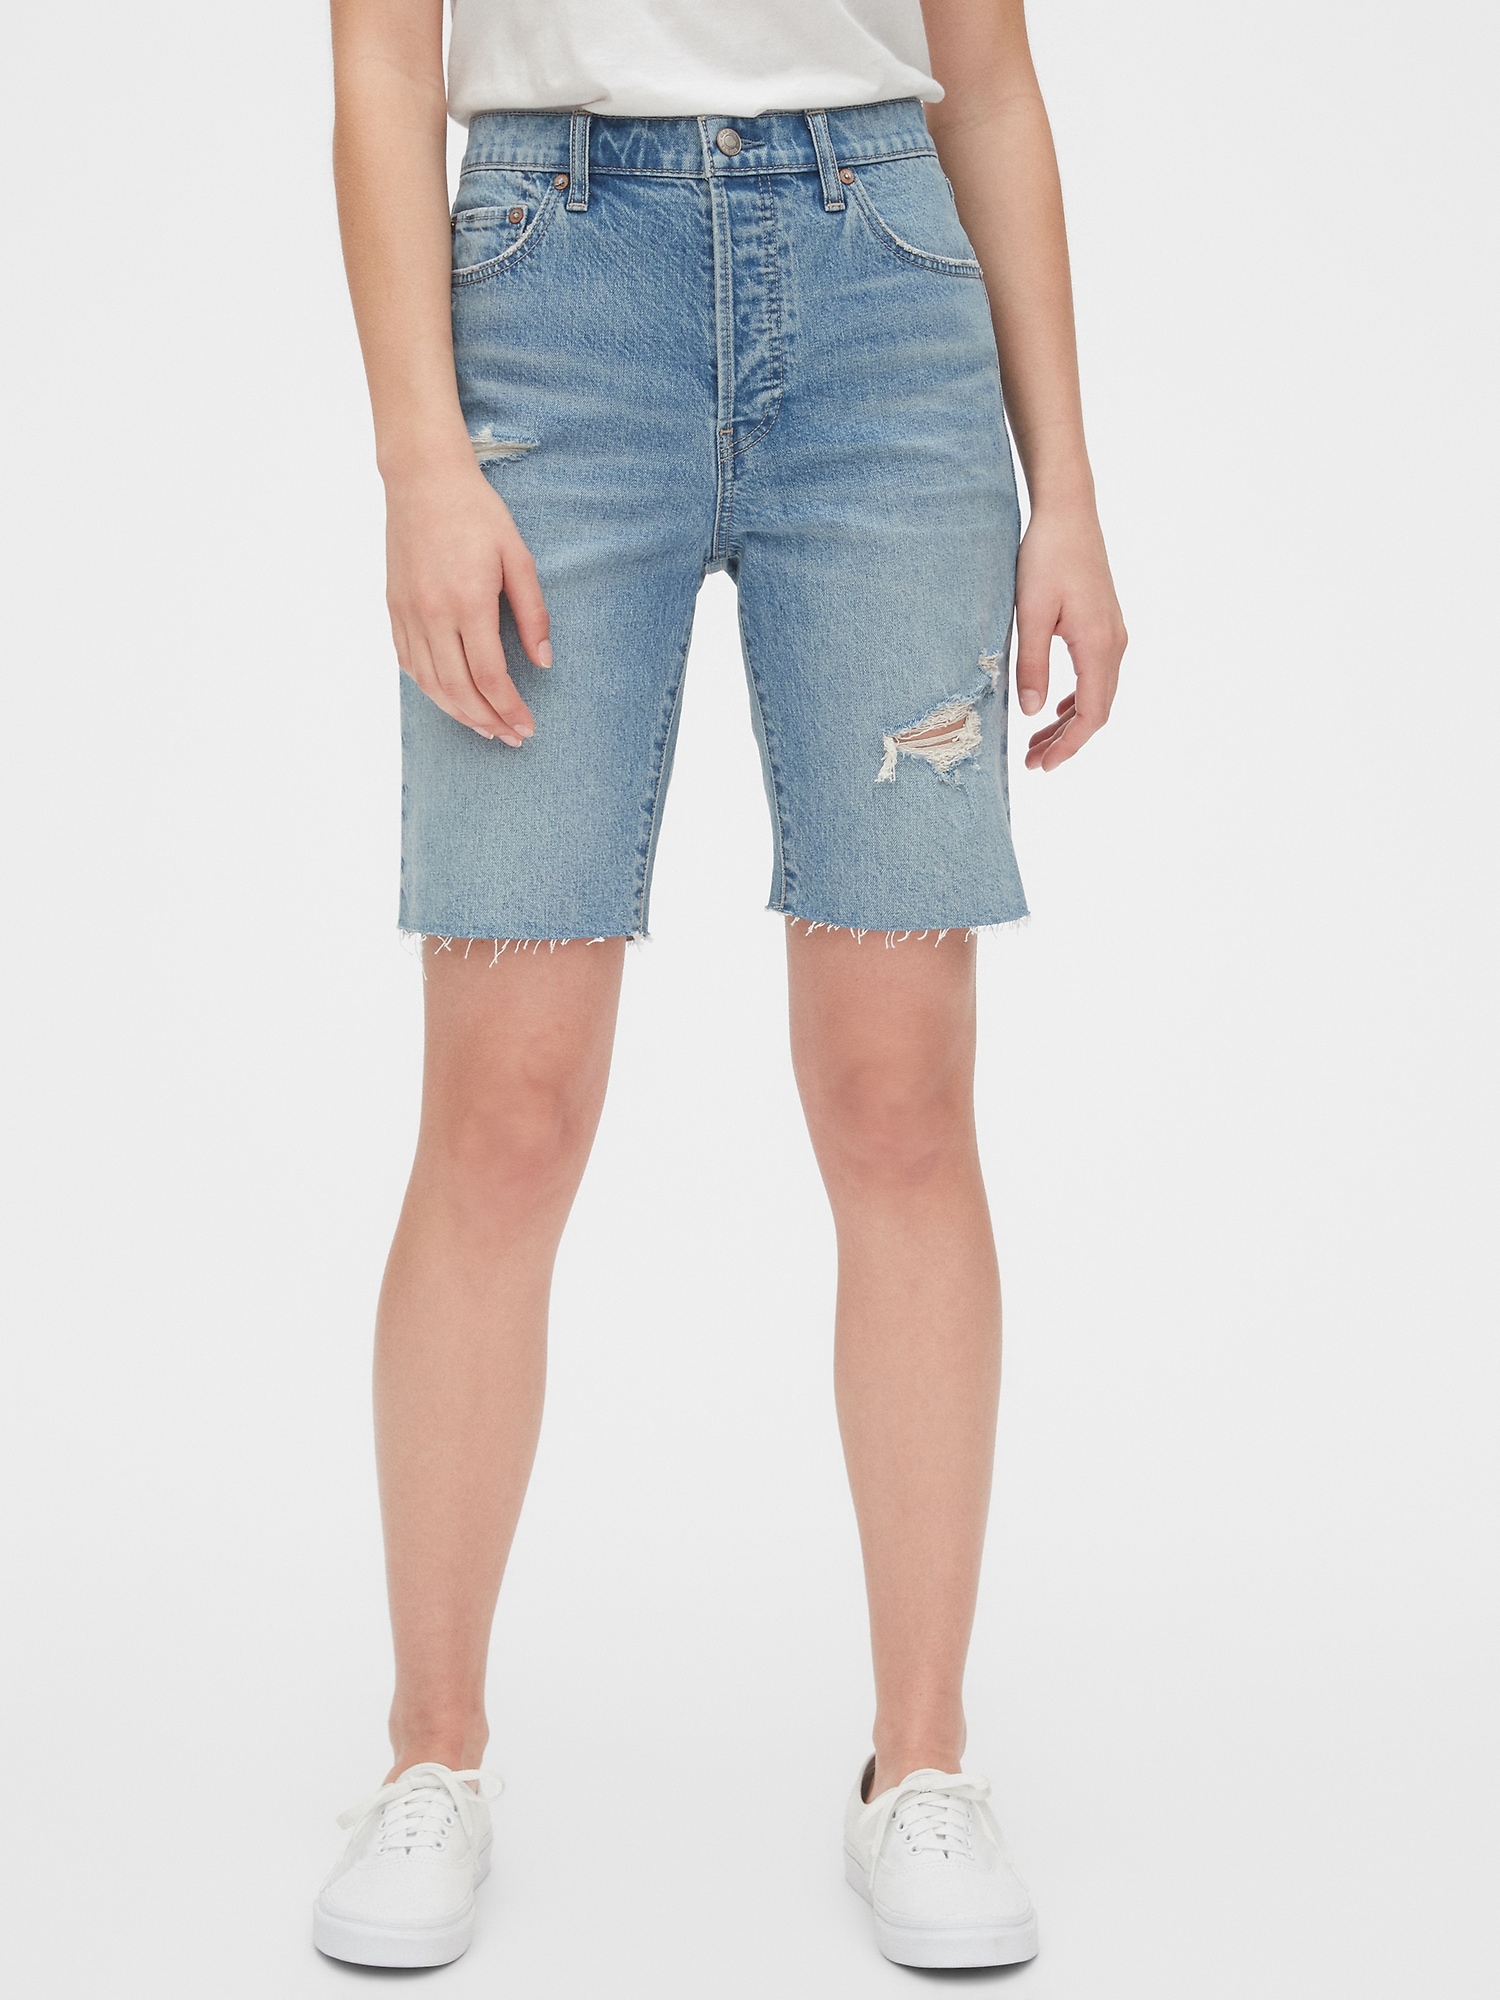 bermuda distressed jean shorts